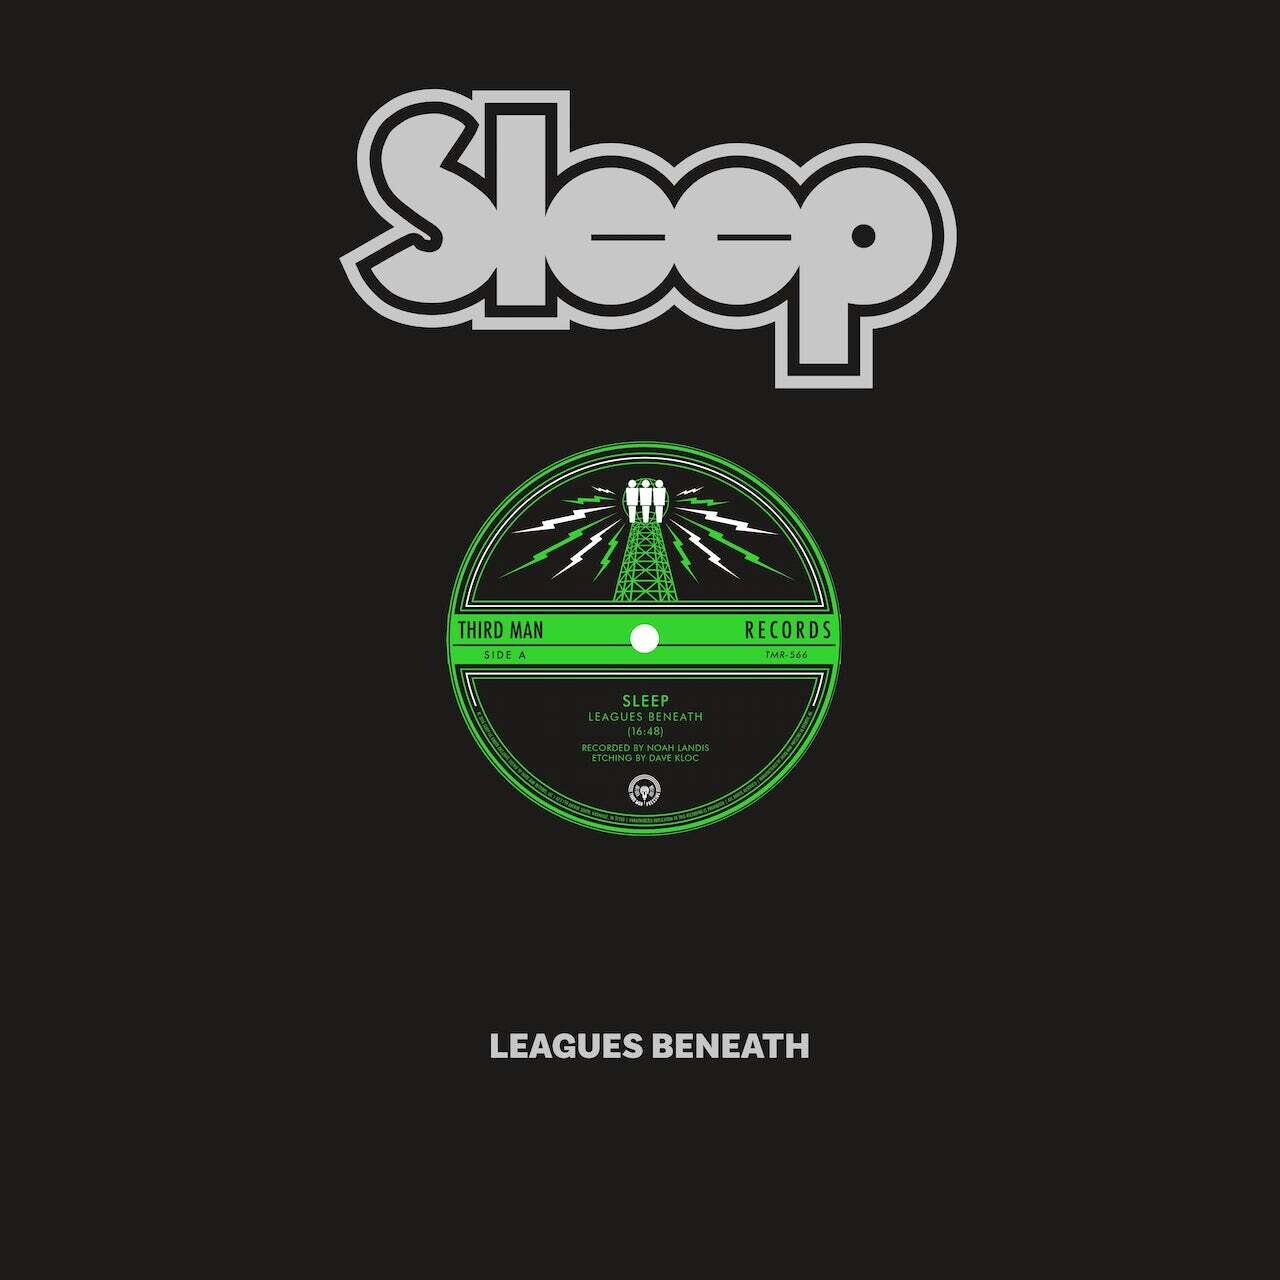 Sleep / Leagues Beneath